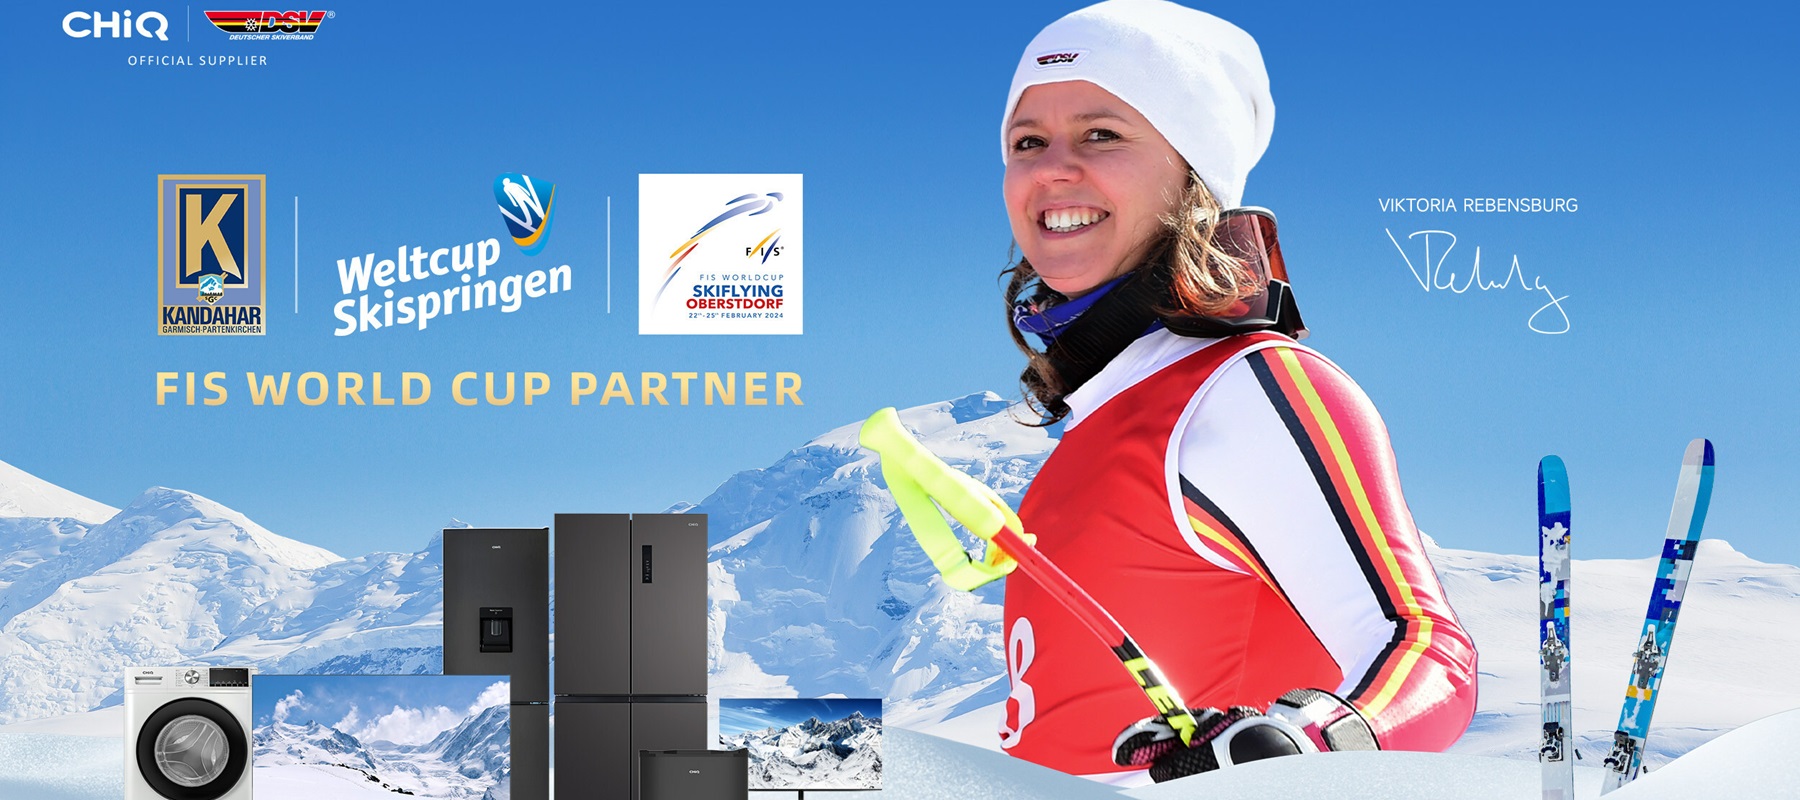 Online appliance retailer CHiQ launches sports marketing campaign featuring champion athlete Viktoria Rebensburg as brand ambassador